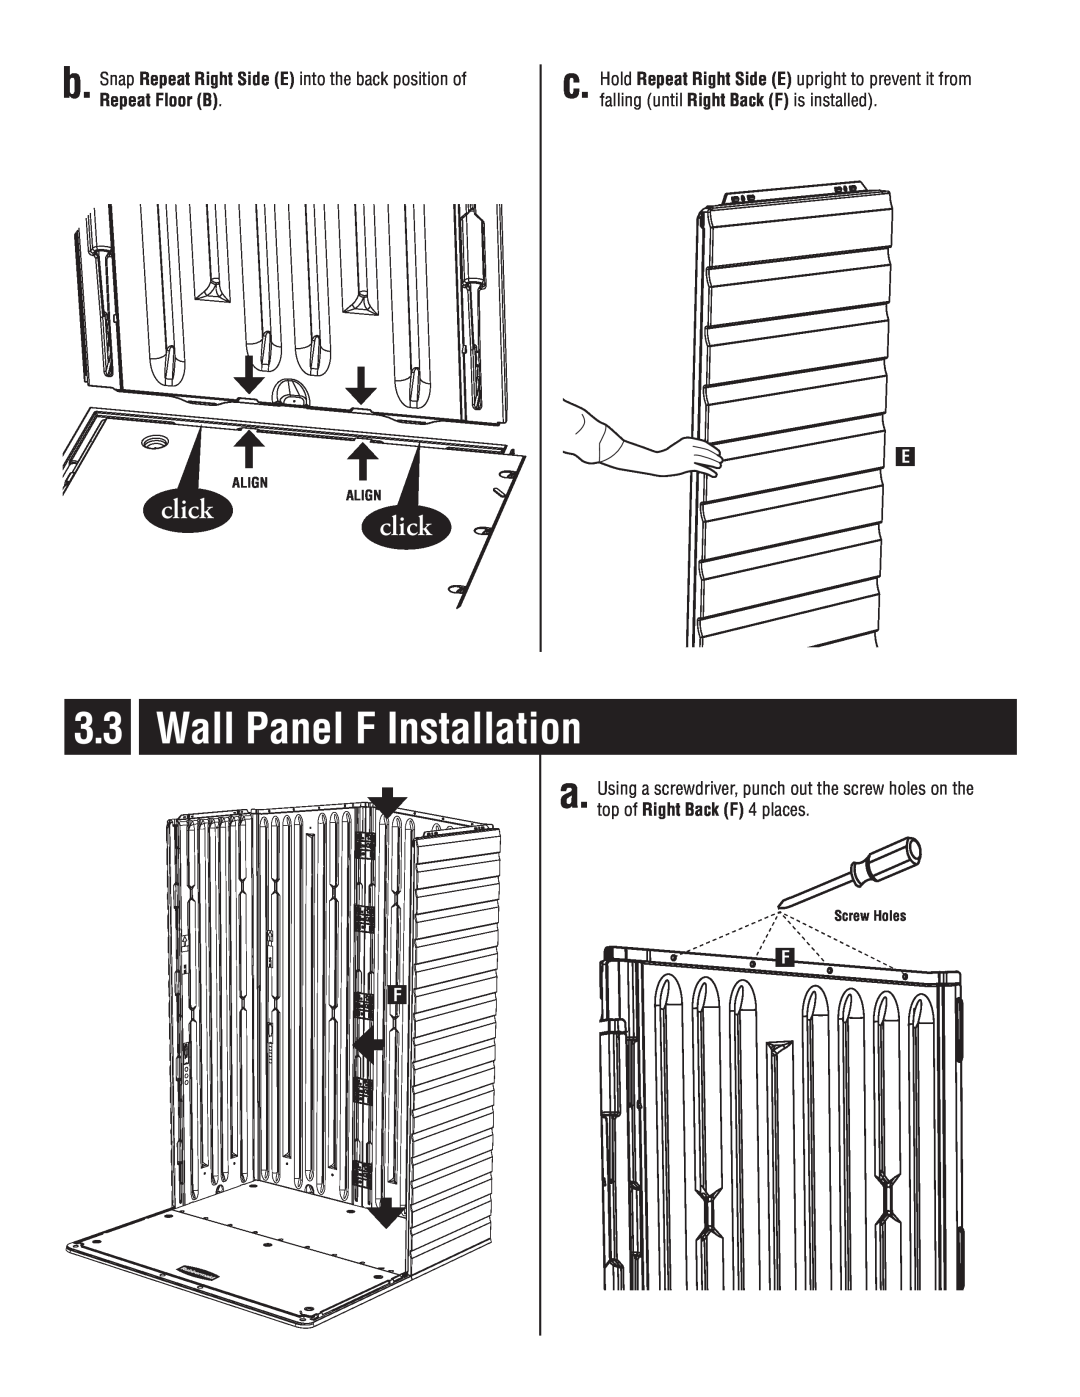 Rubbermaid P0-5L20-P0 instruction manual Wall Panel F Installation a, clickALIGN click 